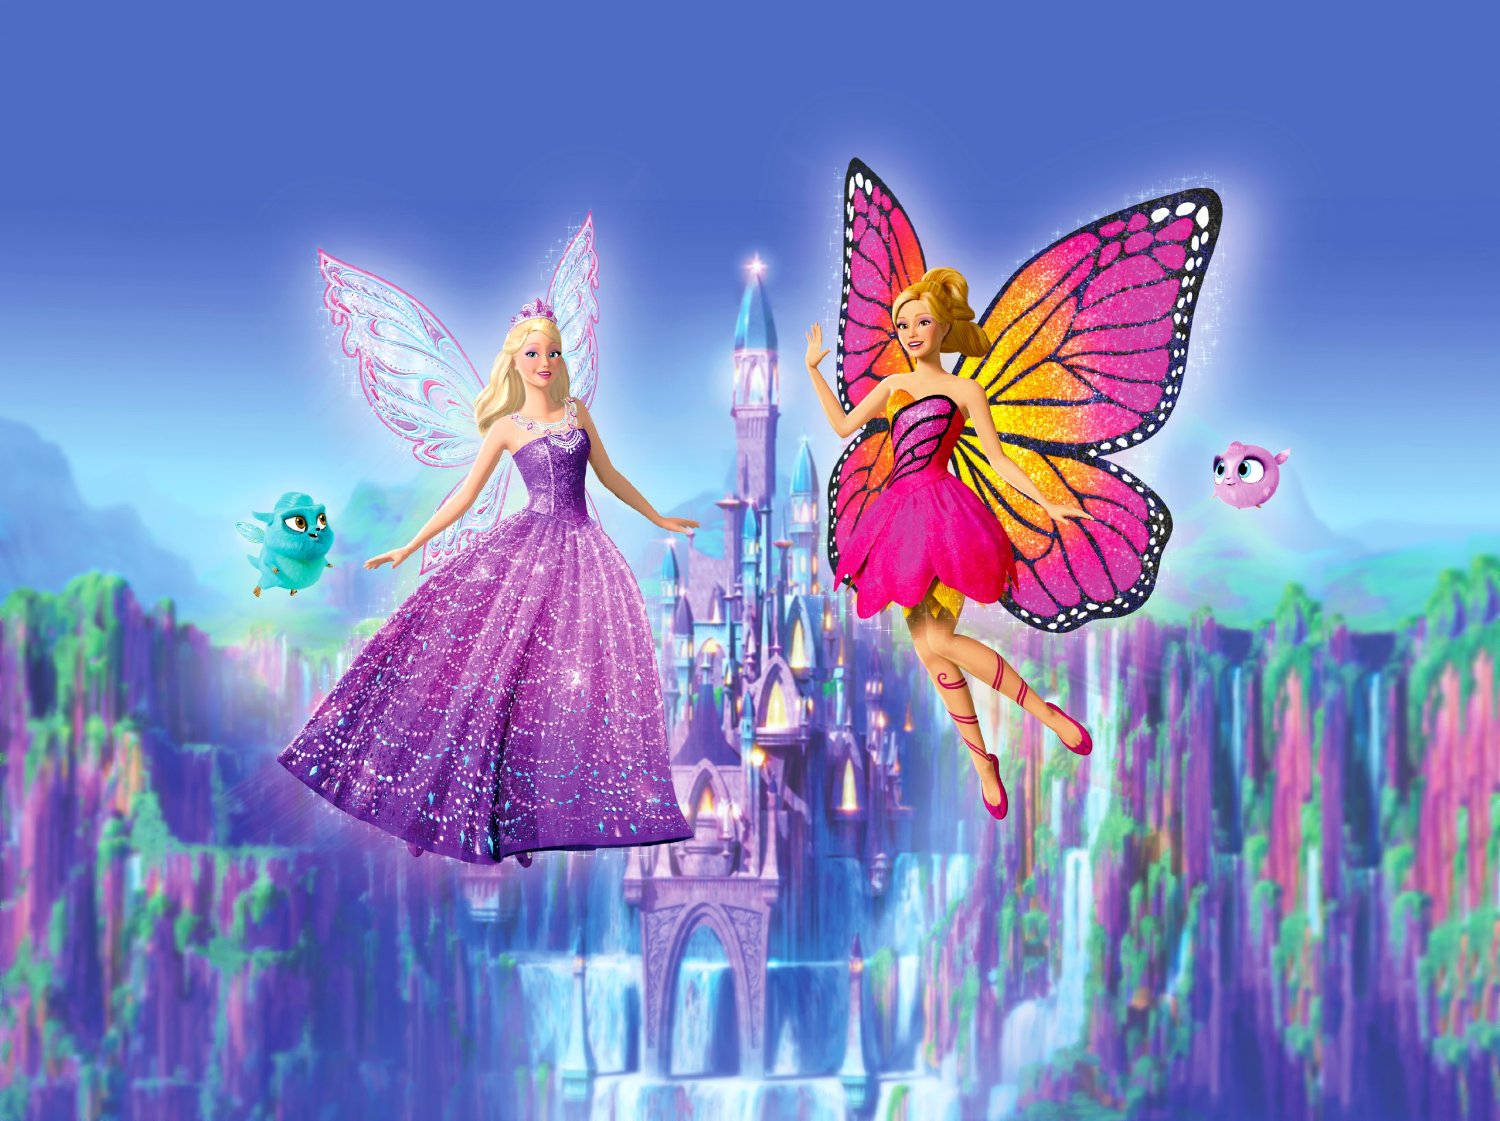 Free Barbie Princess Wallpaper Downloads, [100+] Barbie Princess Wallpapers  for FREE 